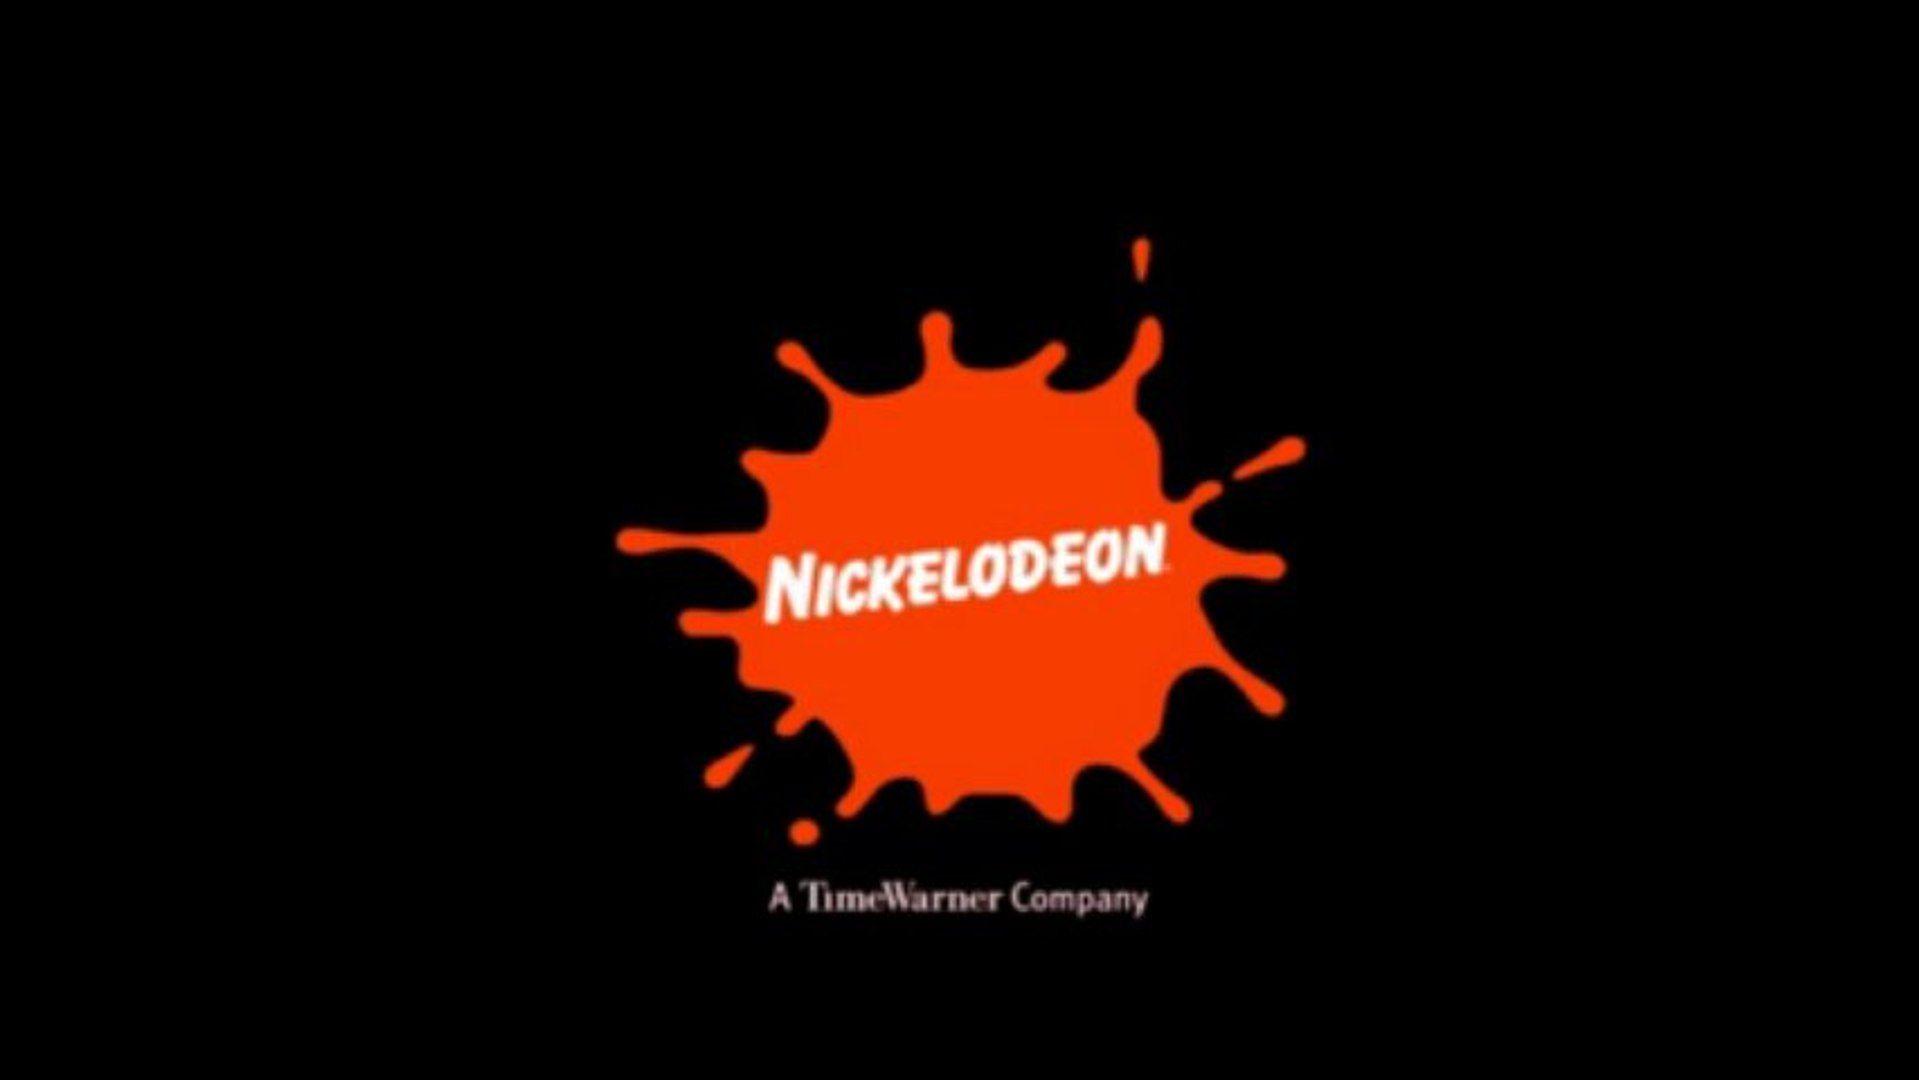 Nickelodoen Logo - Nickelodeon Pictures logo (2004-2009)